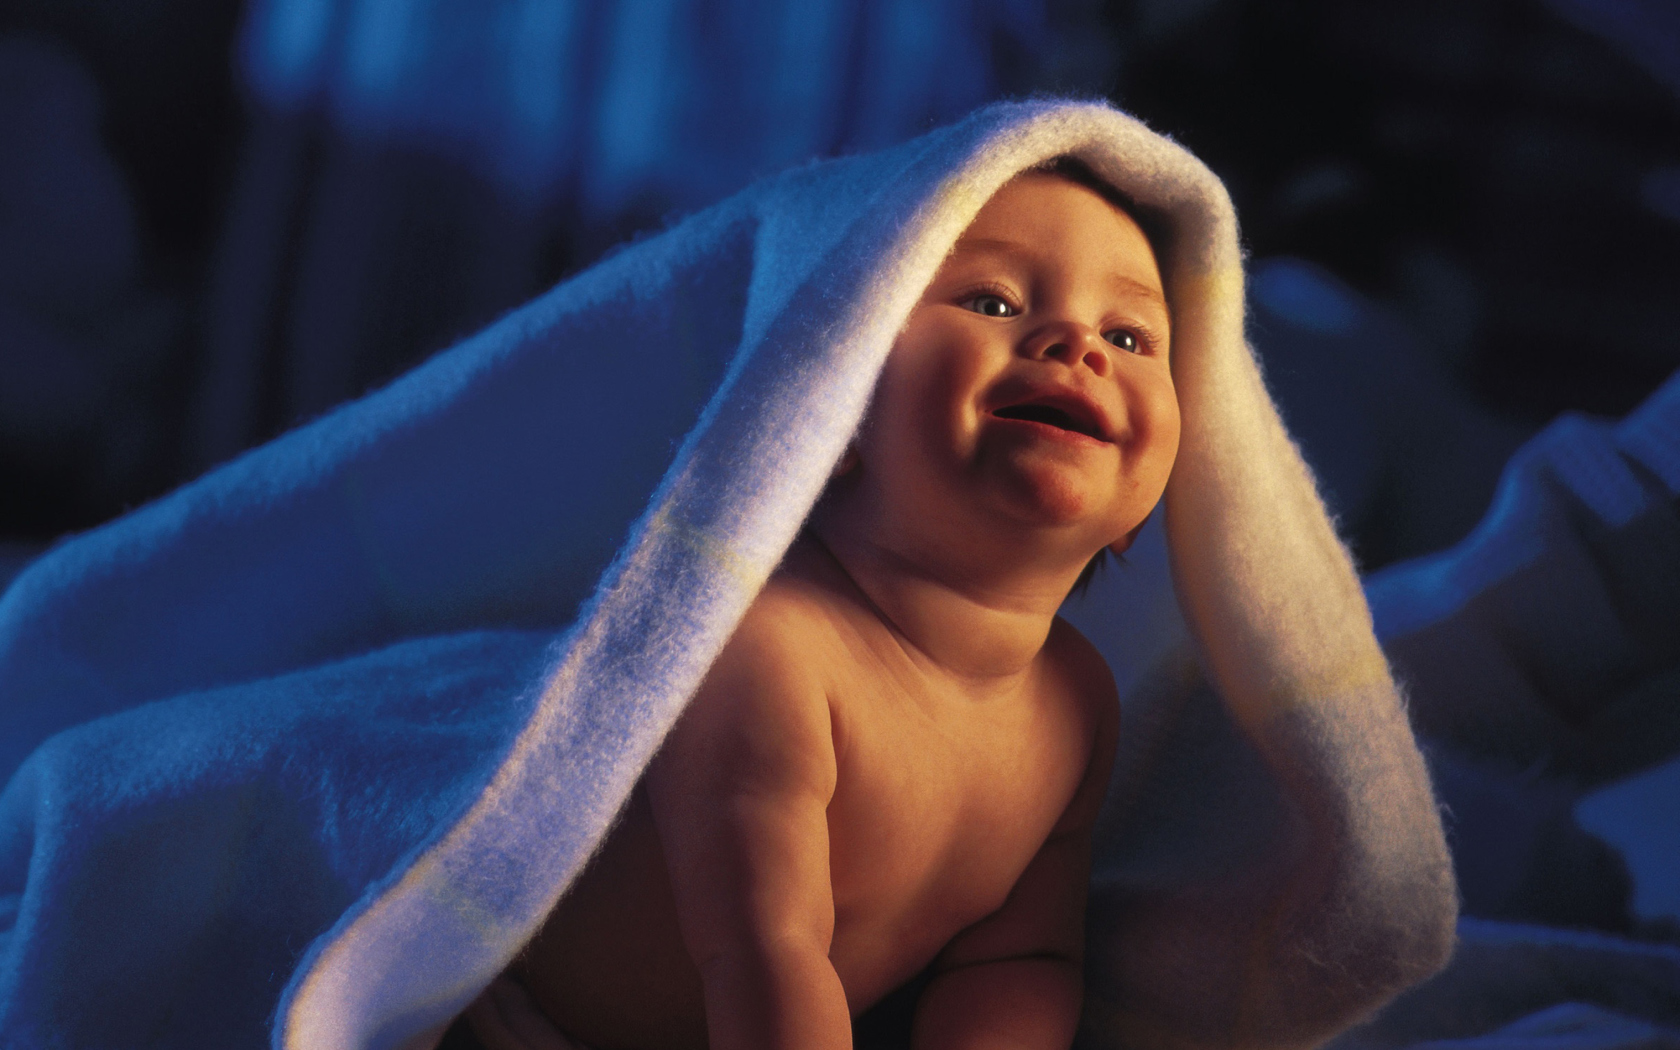 Smiling Baby wallpaper 1680x1050